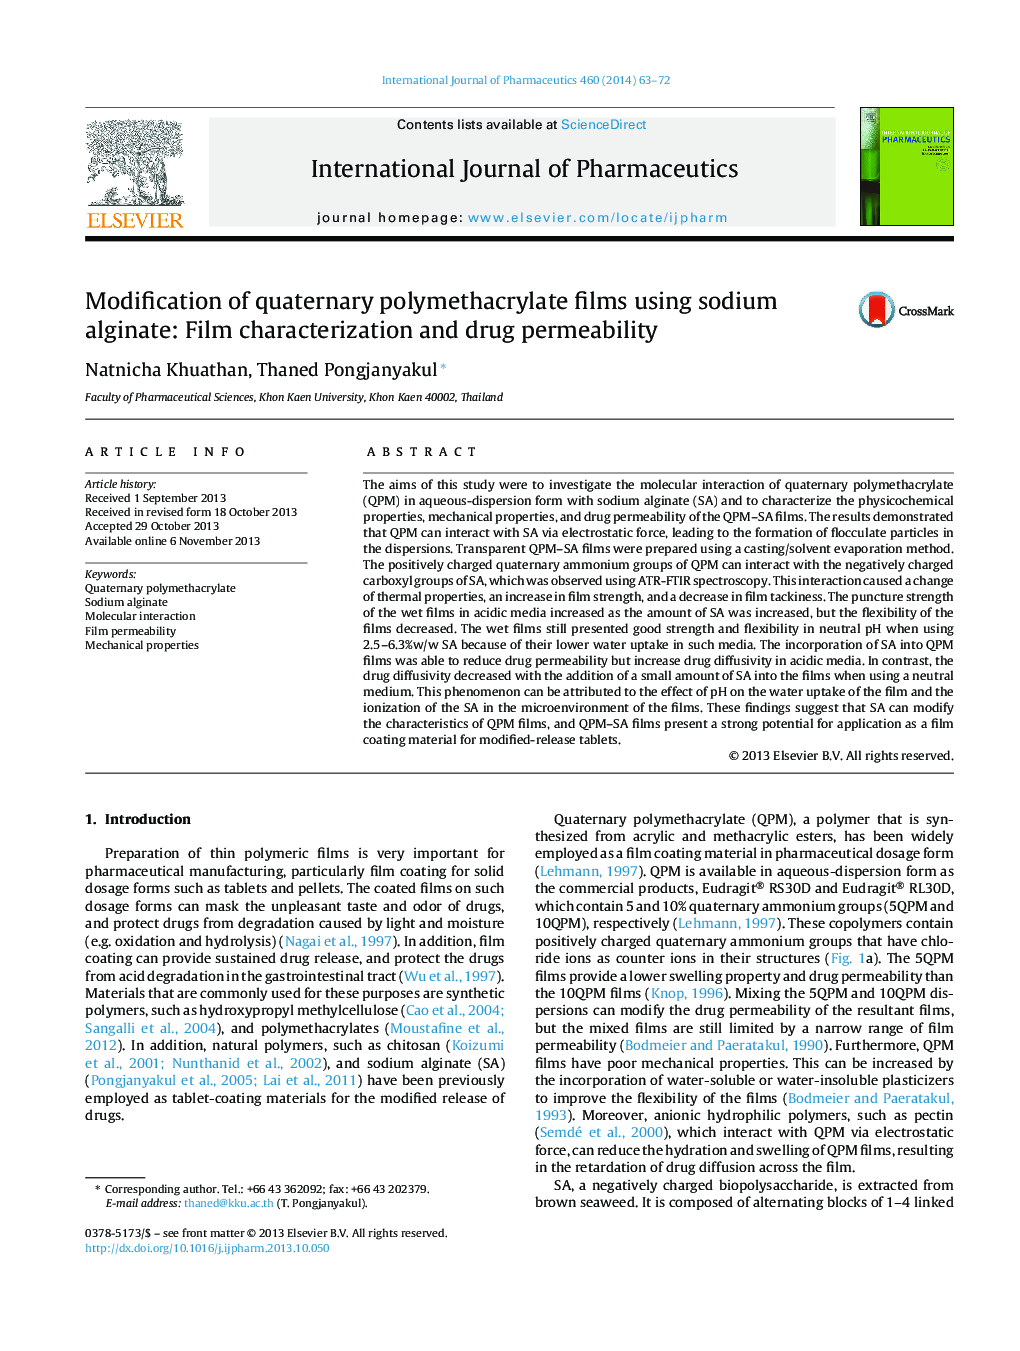 Modification of quaternary polymethacrylate films using sodium alginate: Film characterization and drug permeability